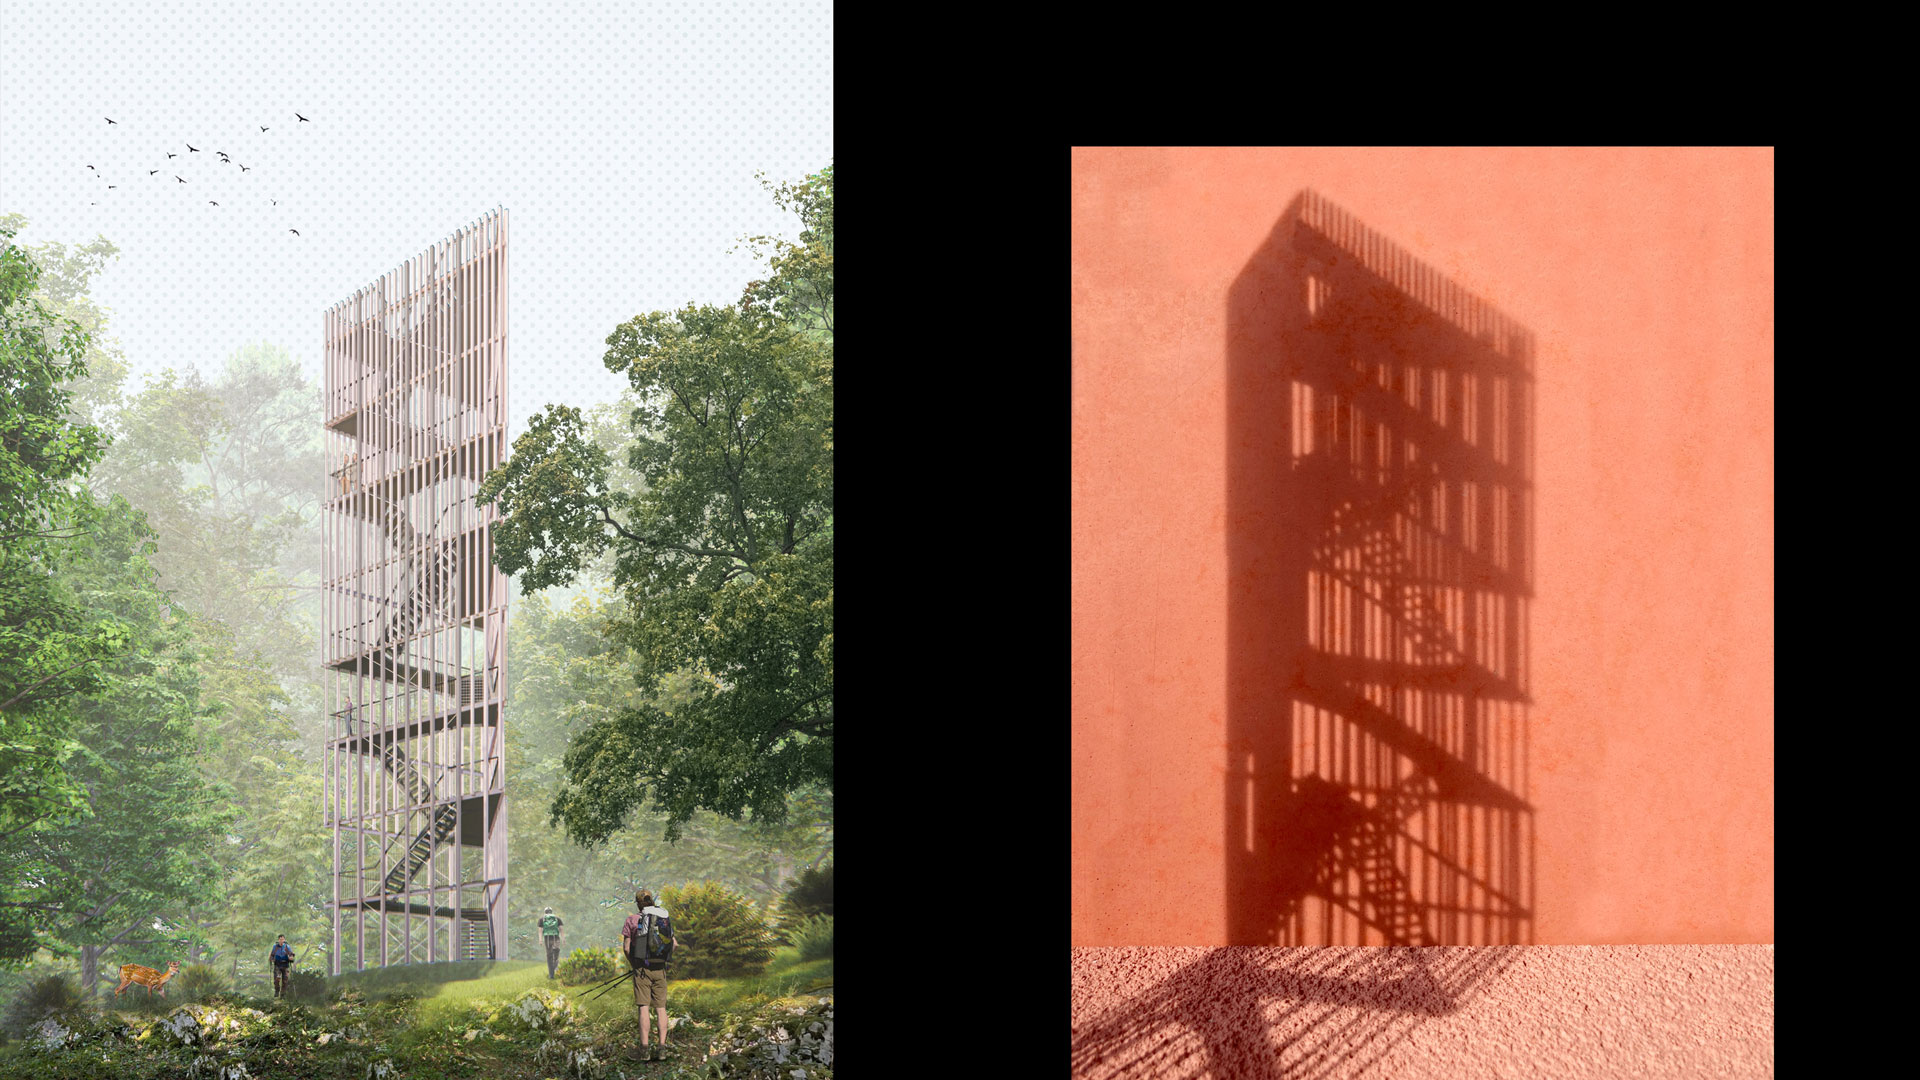 Bovljek Observation Tower, tower design, Architecture, Studio Sadar, Outdoor intervention